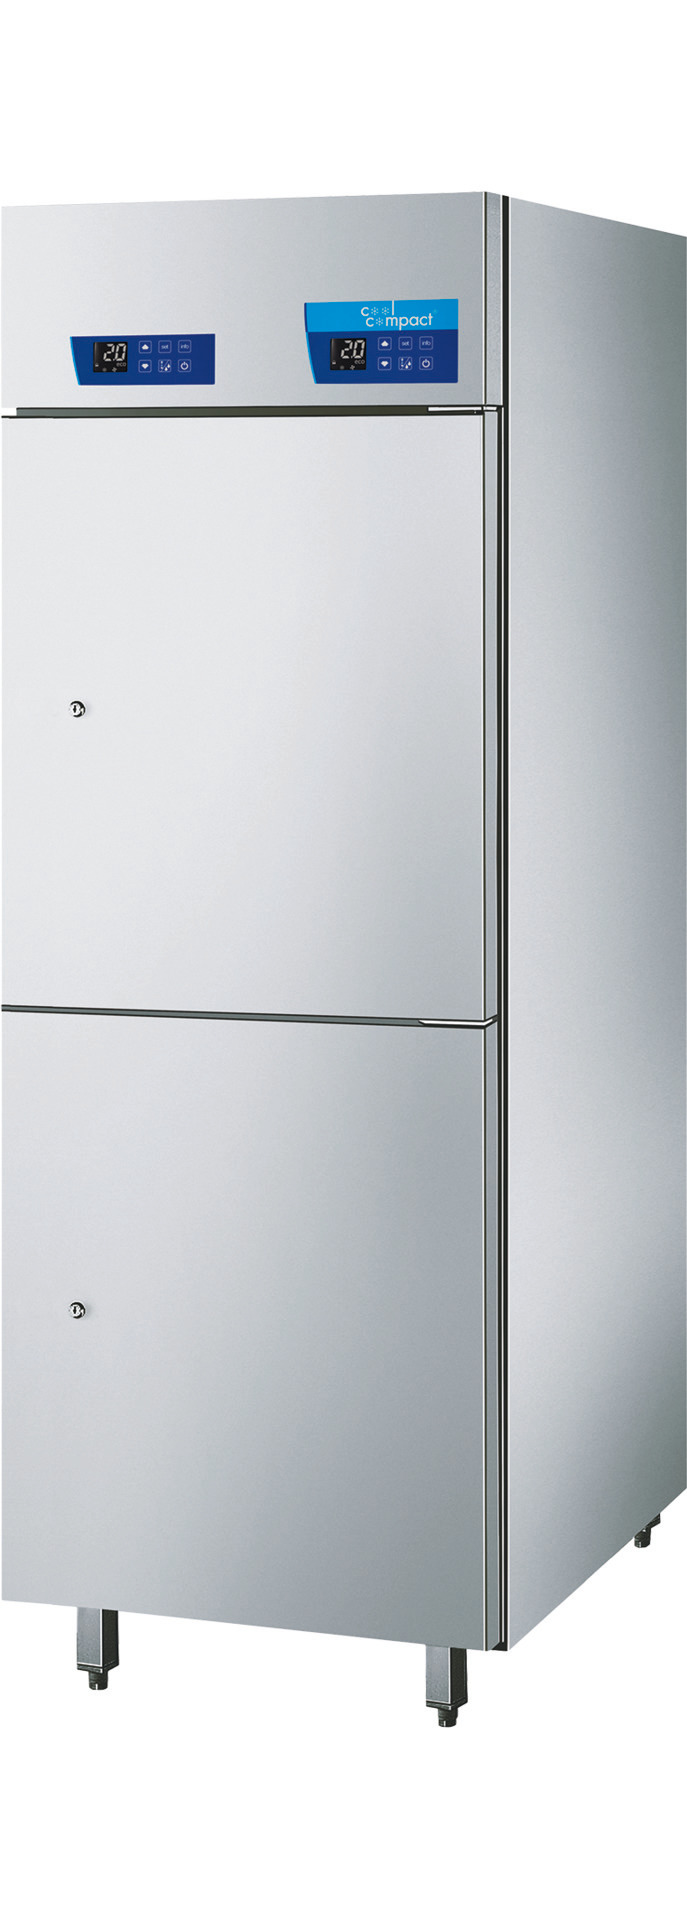 Umluft-Kühlschrank 2-Temperaturen  10 x GN 2/1 + 8 x GN 2/1 / steckerfertig